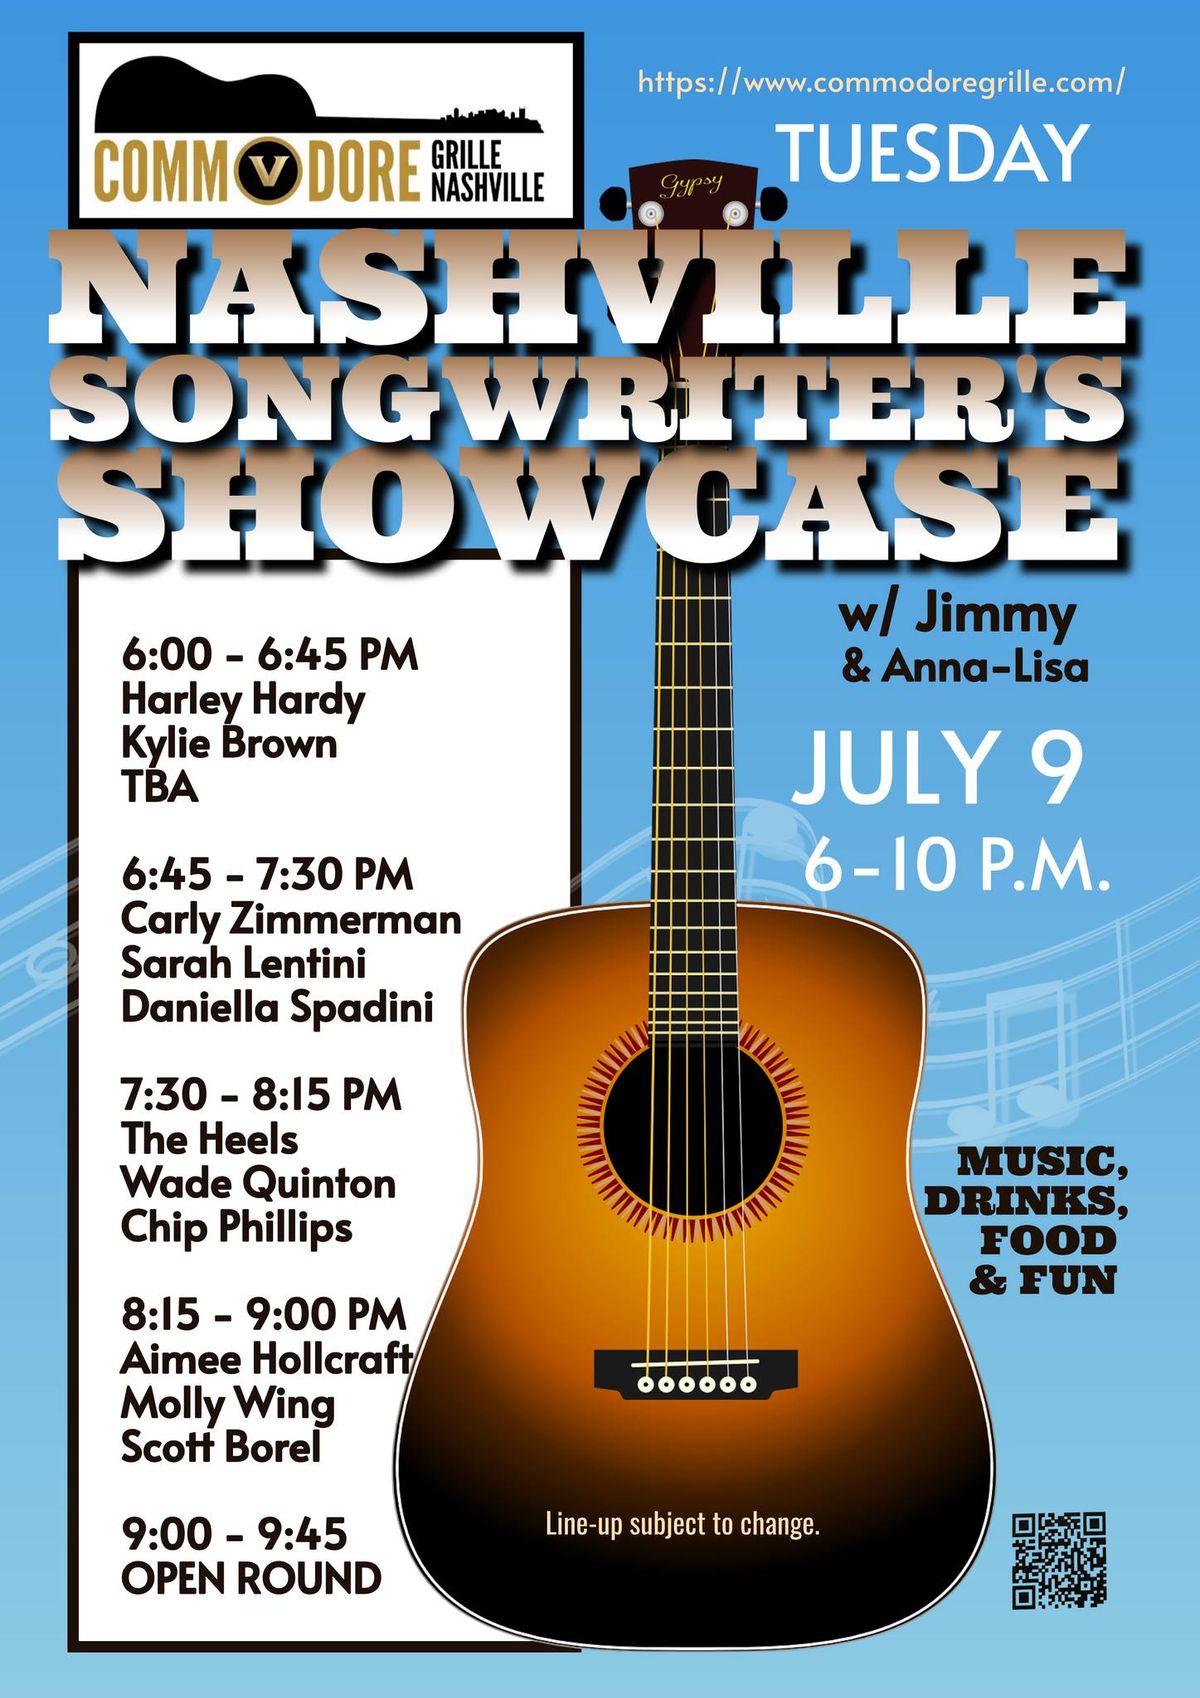 Nashville Songwriter's Showcase